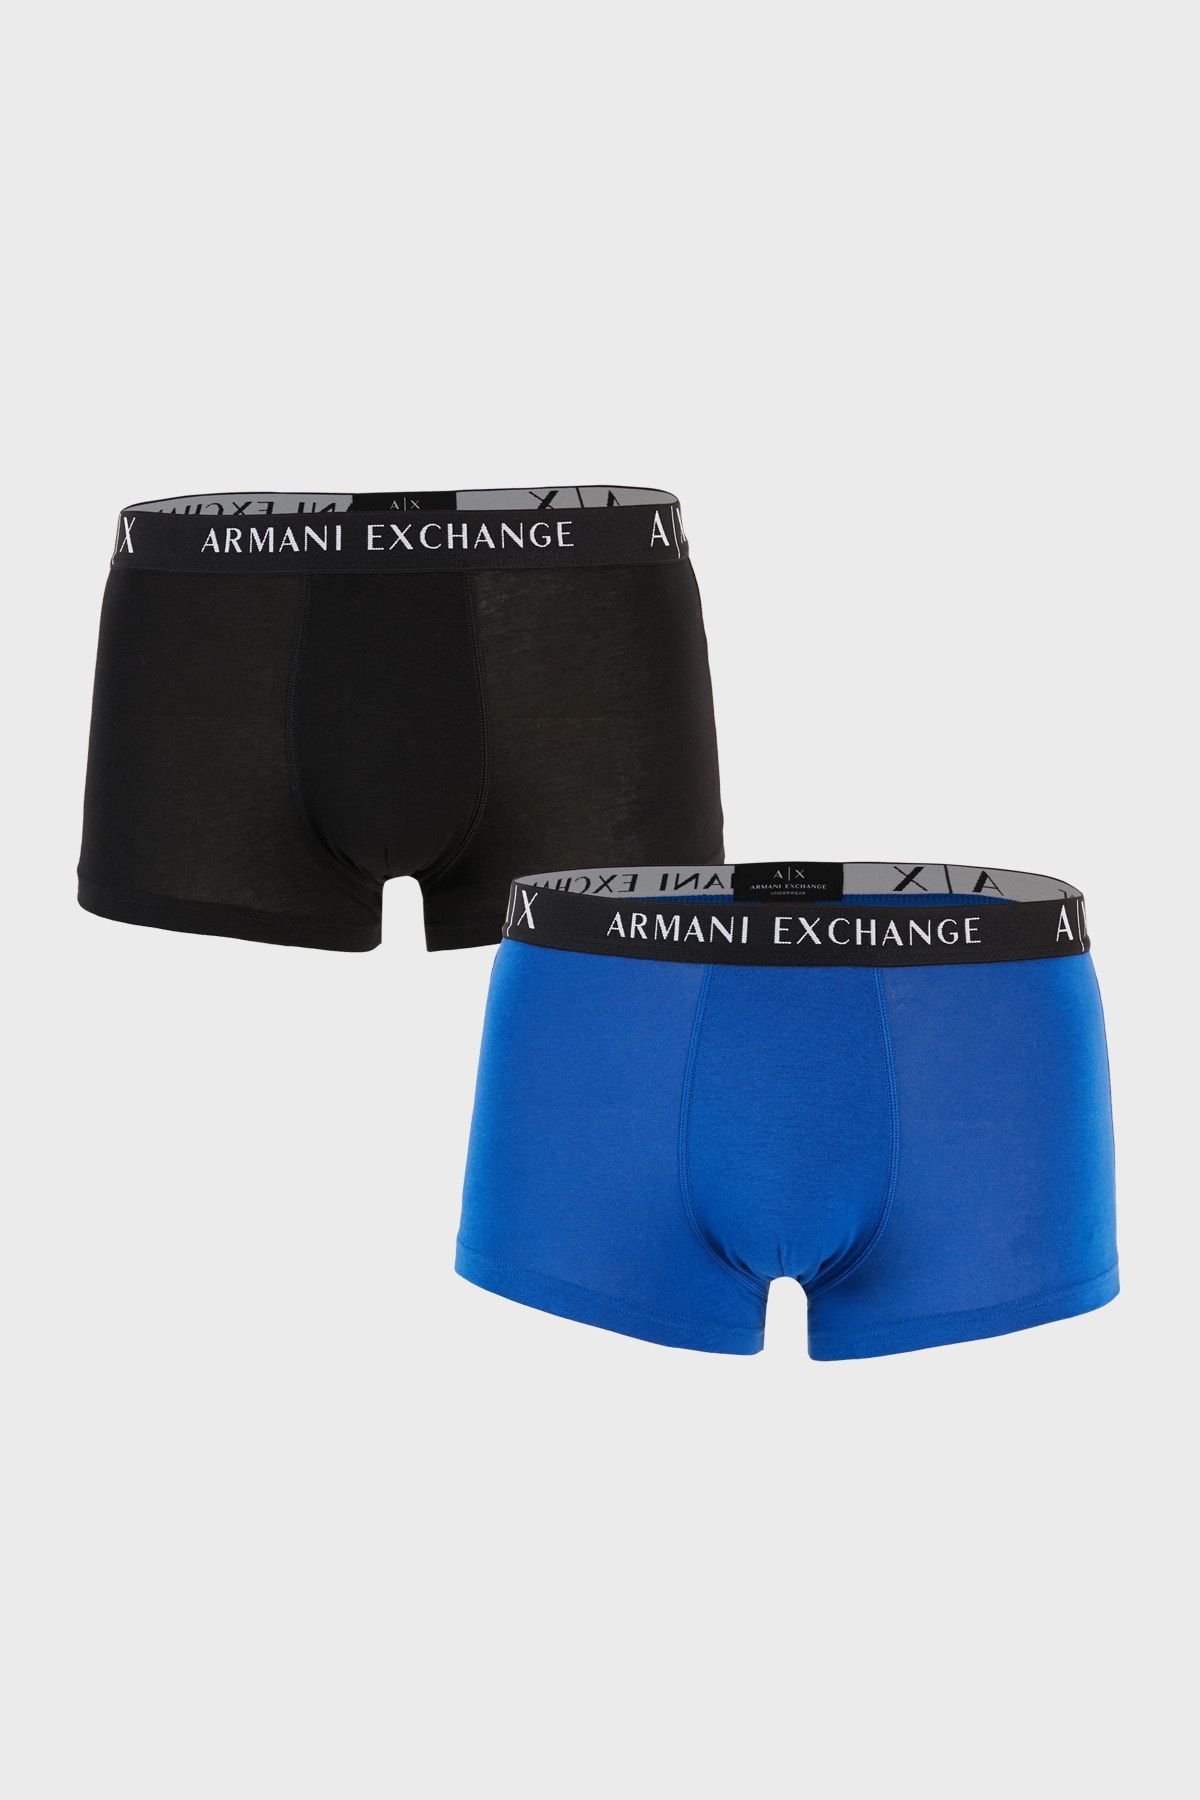 Buy Armani Exchange AX Logo Underwear, Set of 2 for Mens